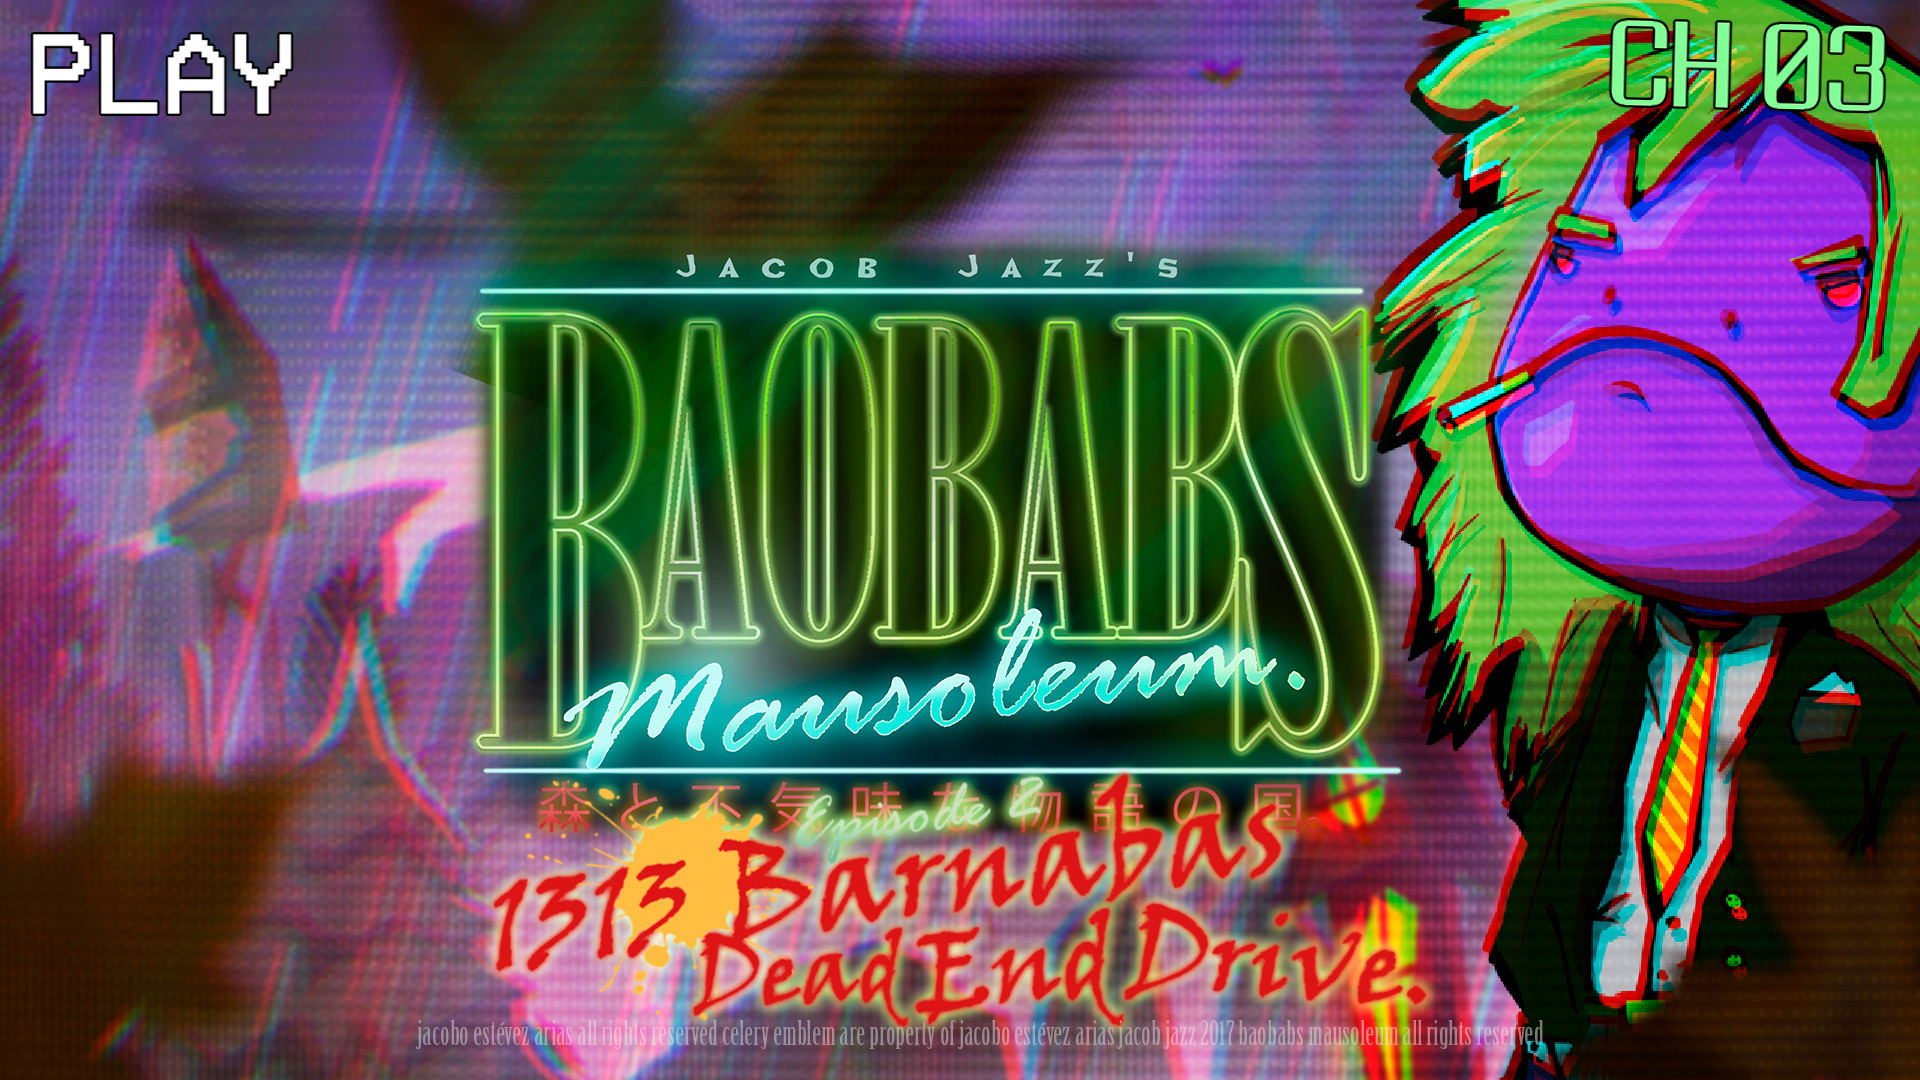 Baobabs Mausoleum Ep.2: 1313 Barnabas Dead End Drive 1